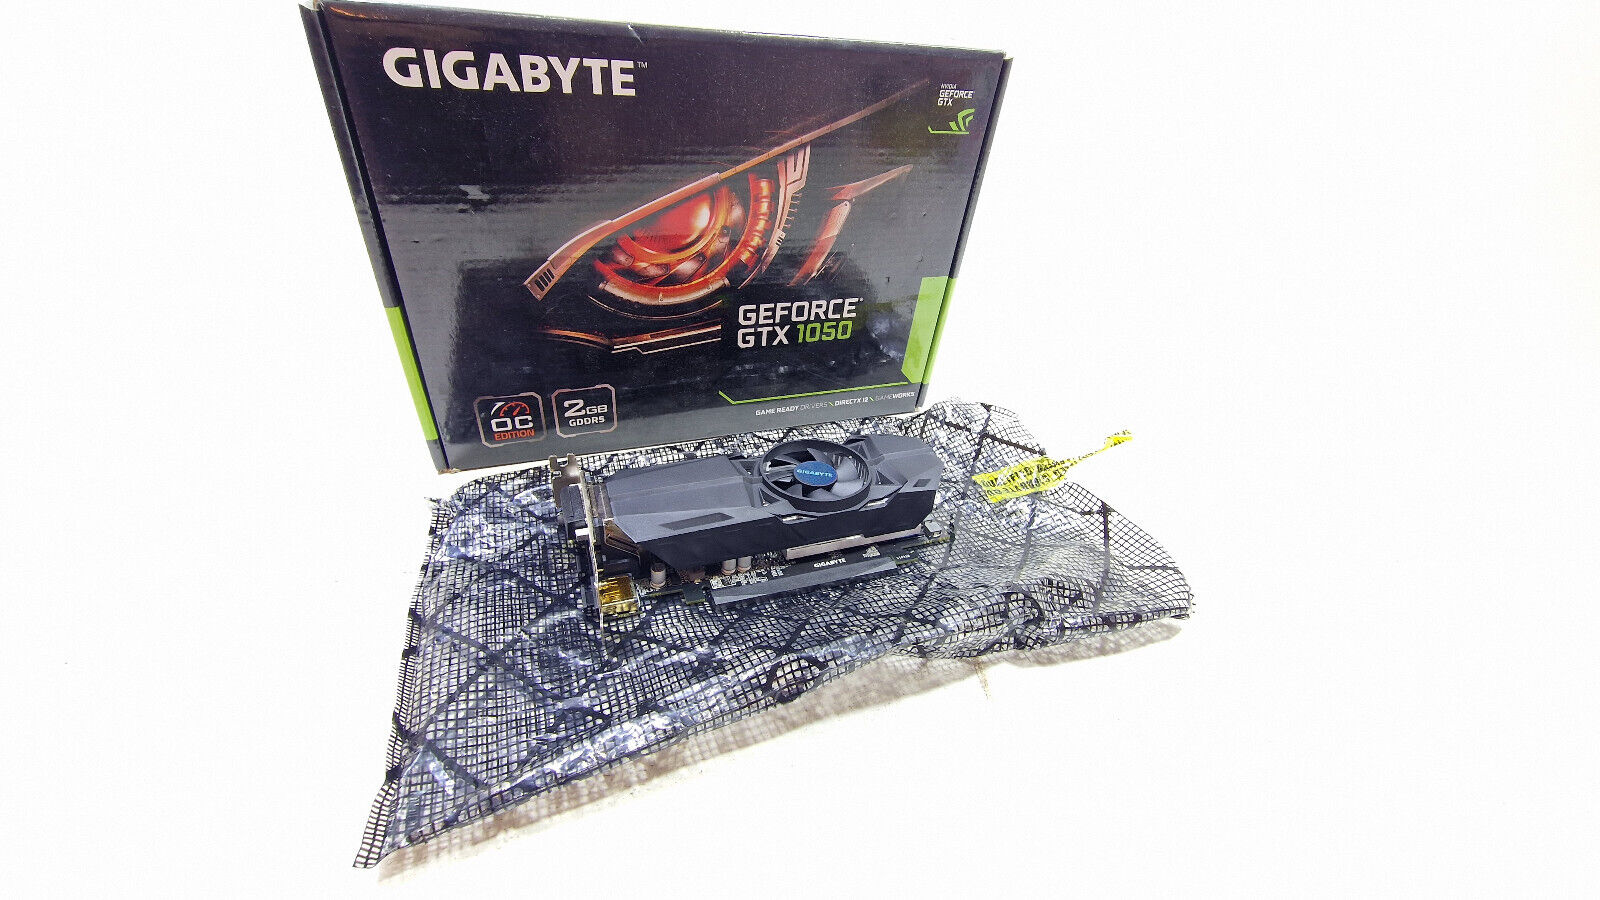 Gigabyte-GTX-1050-2GB-GDDR5-Low-Profile - 195807